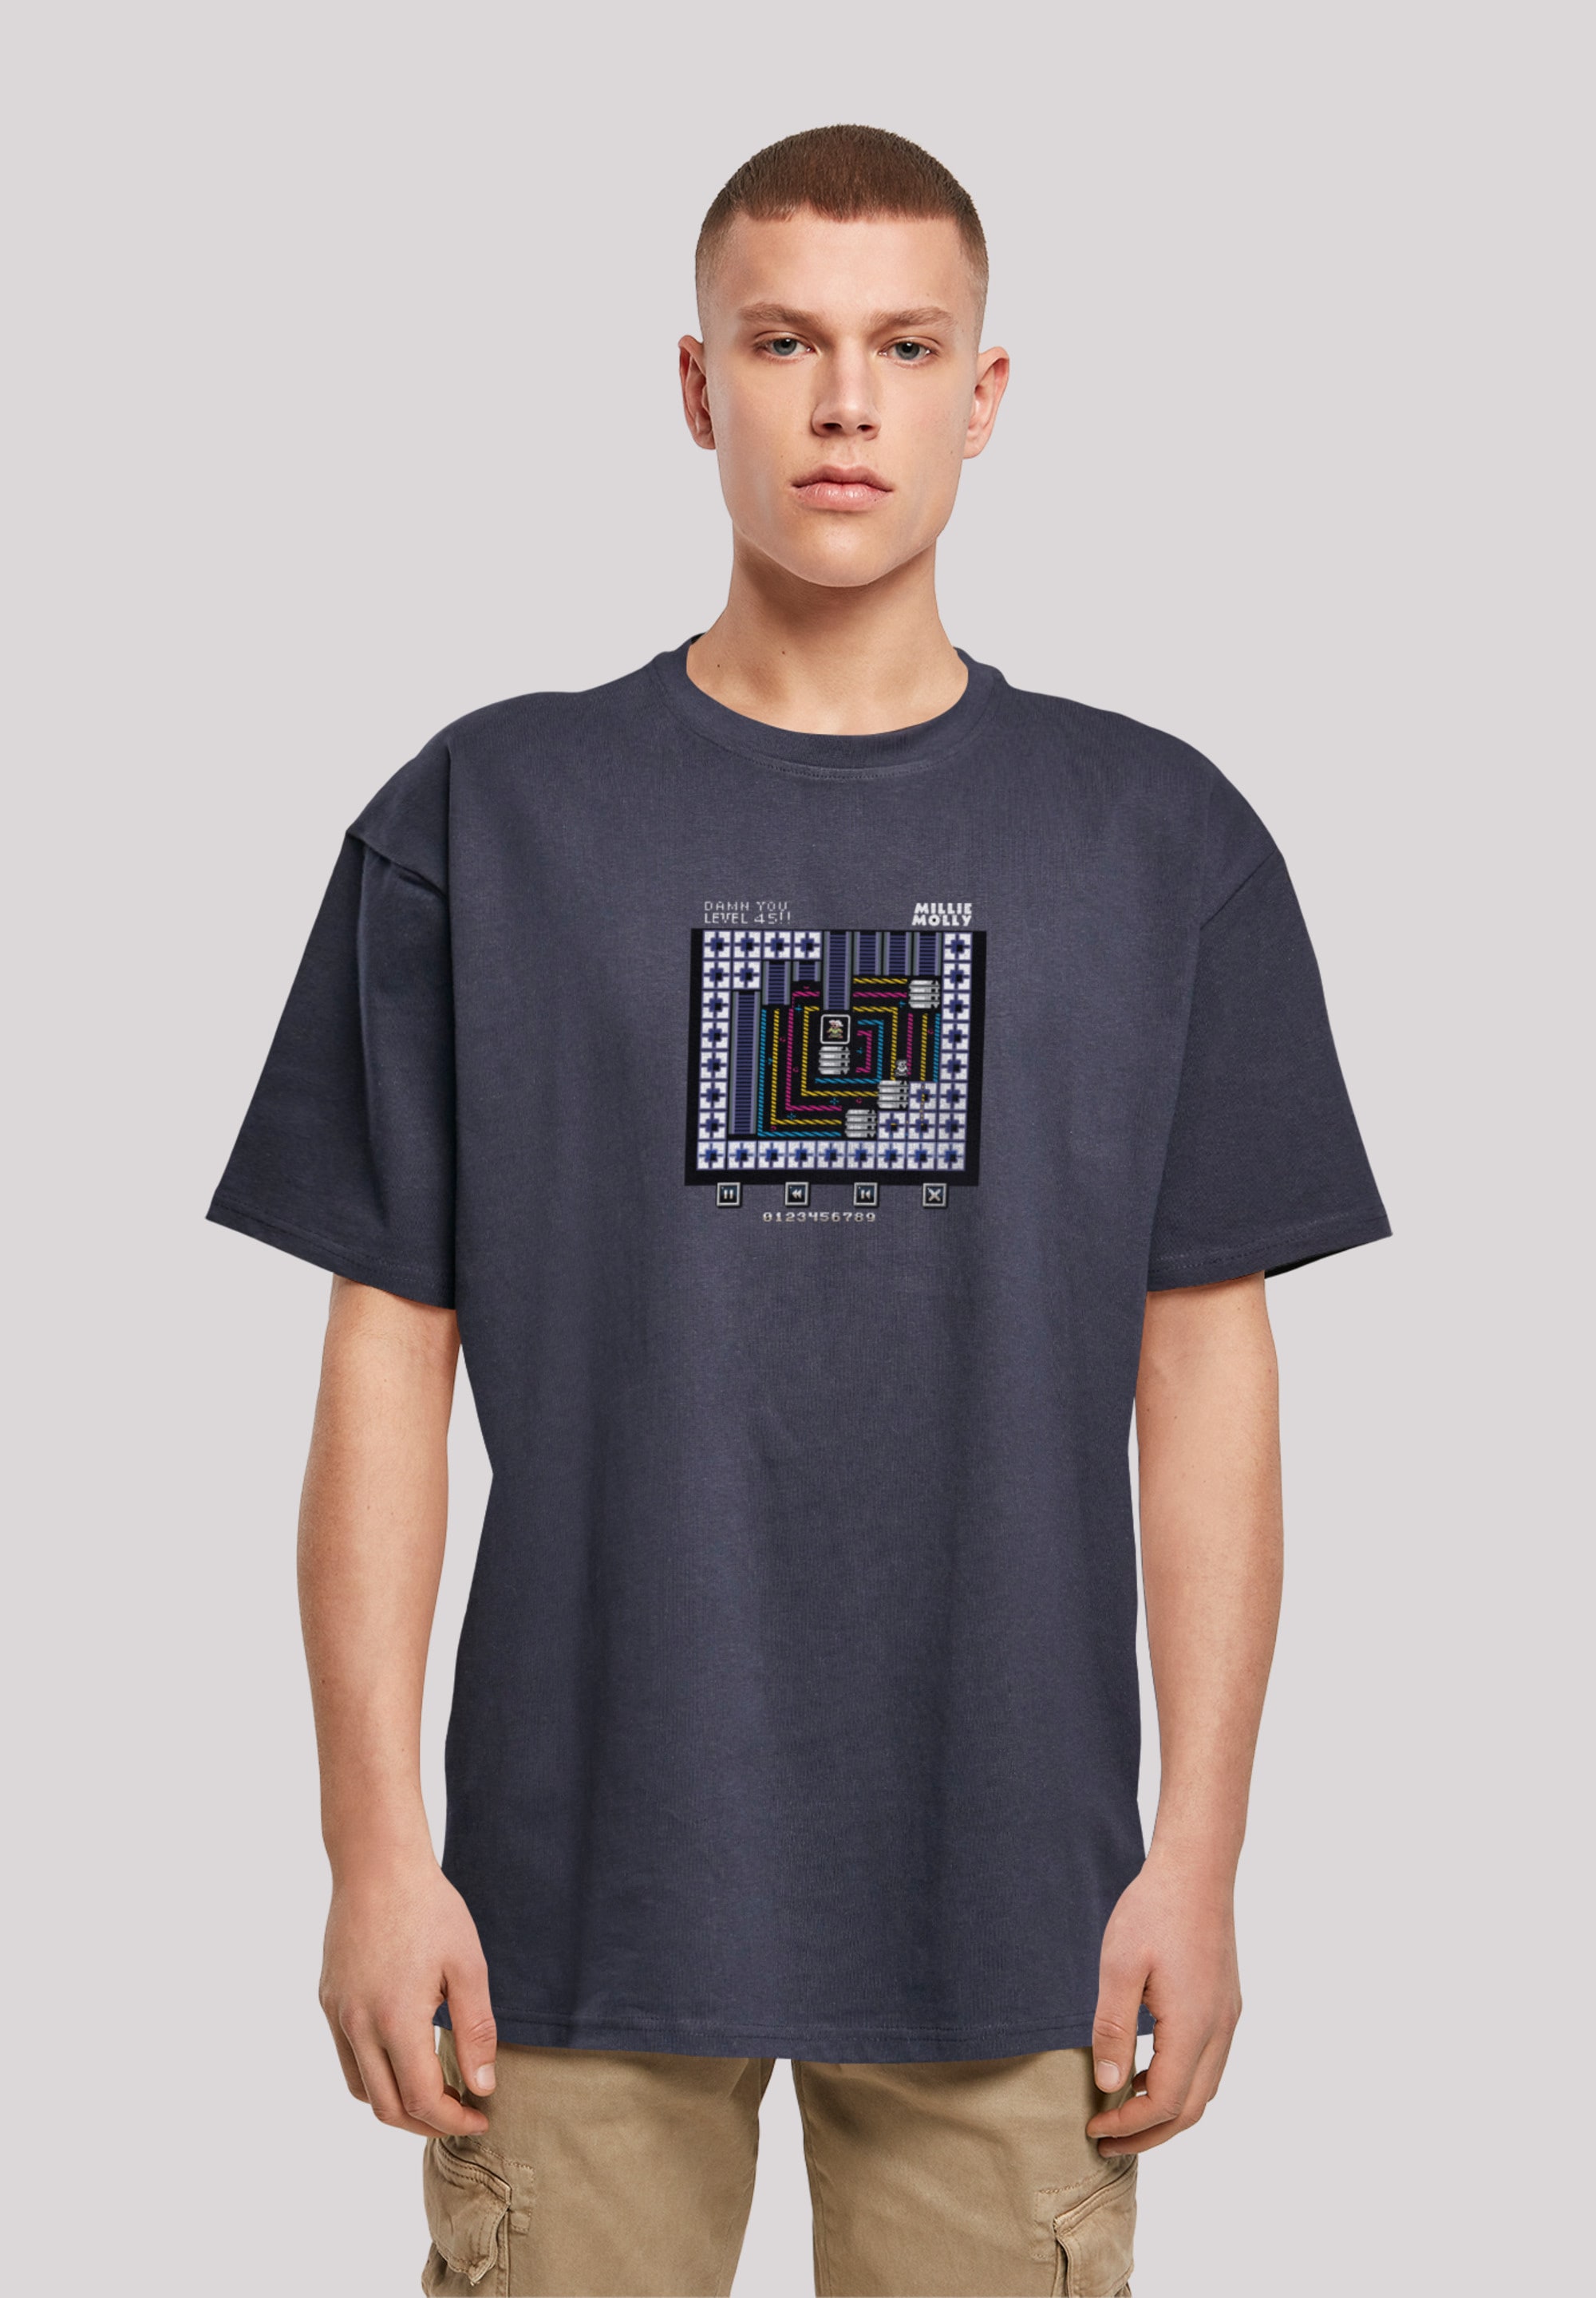 F4NT4STIC T-Shirt »Level 45 Millie Mollie C64 Retro Gaming«, Print